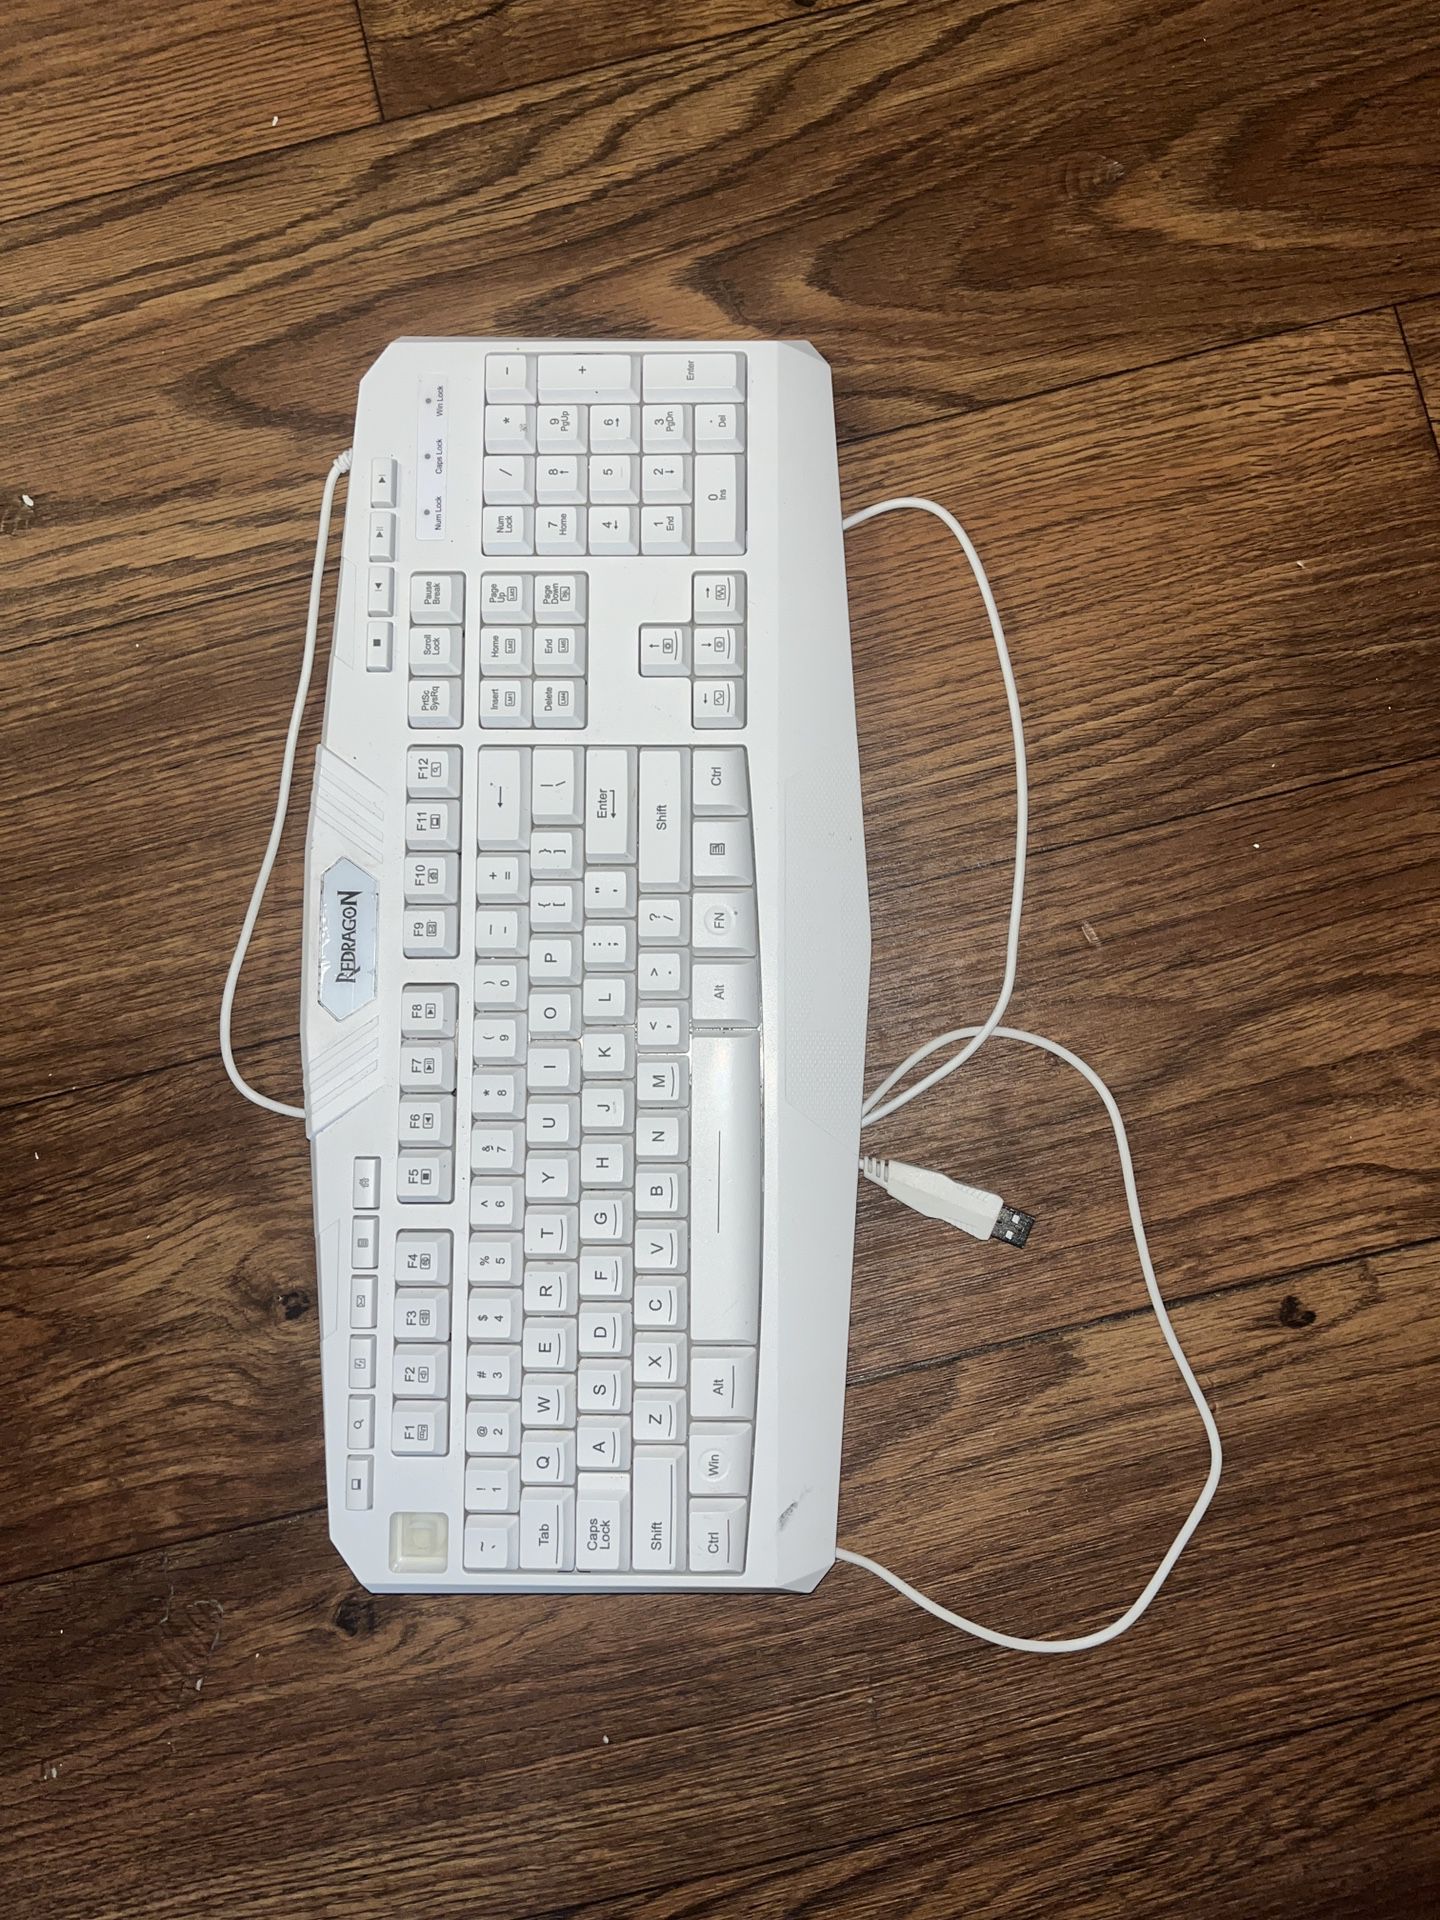 REDDRAGON LED Keyboard (White）